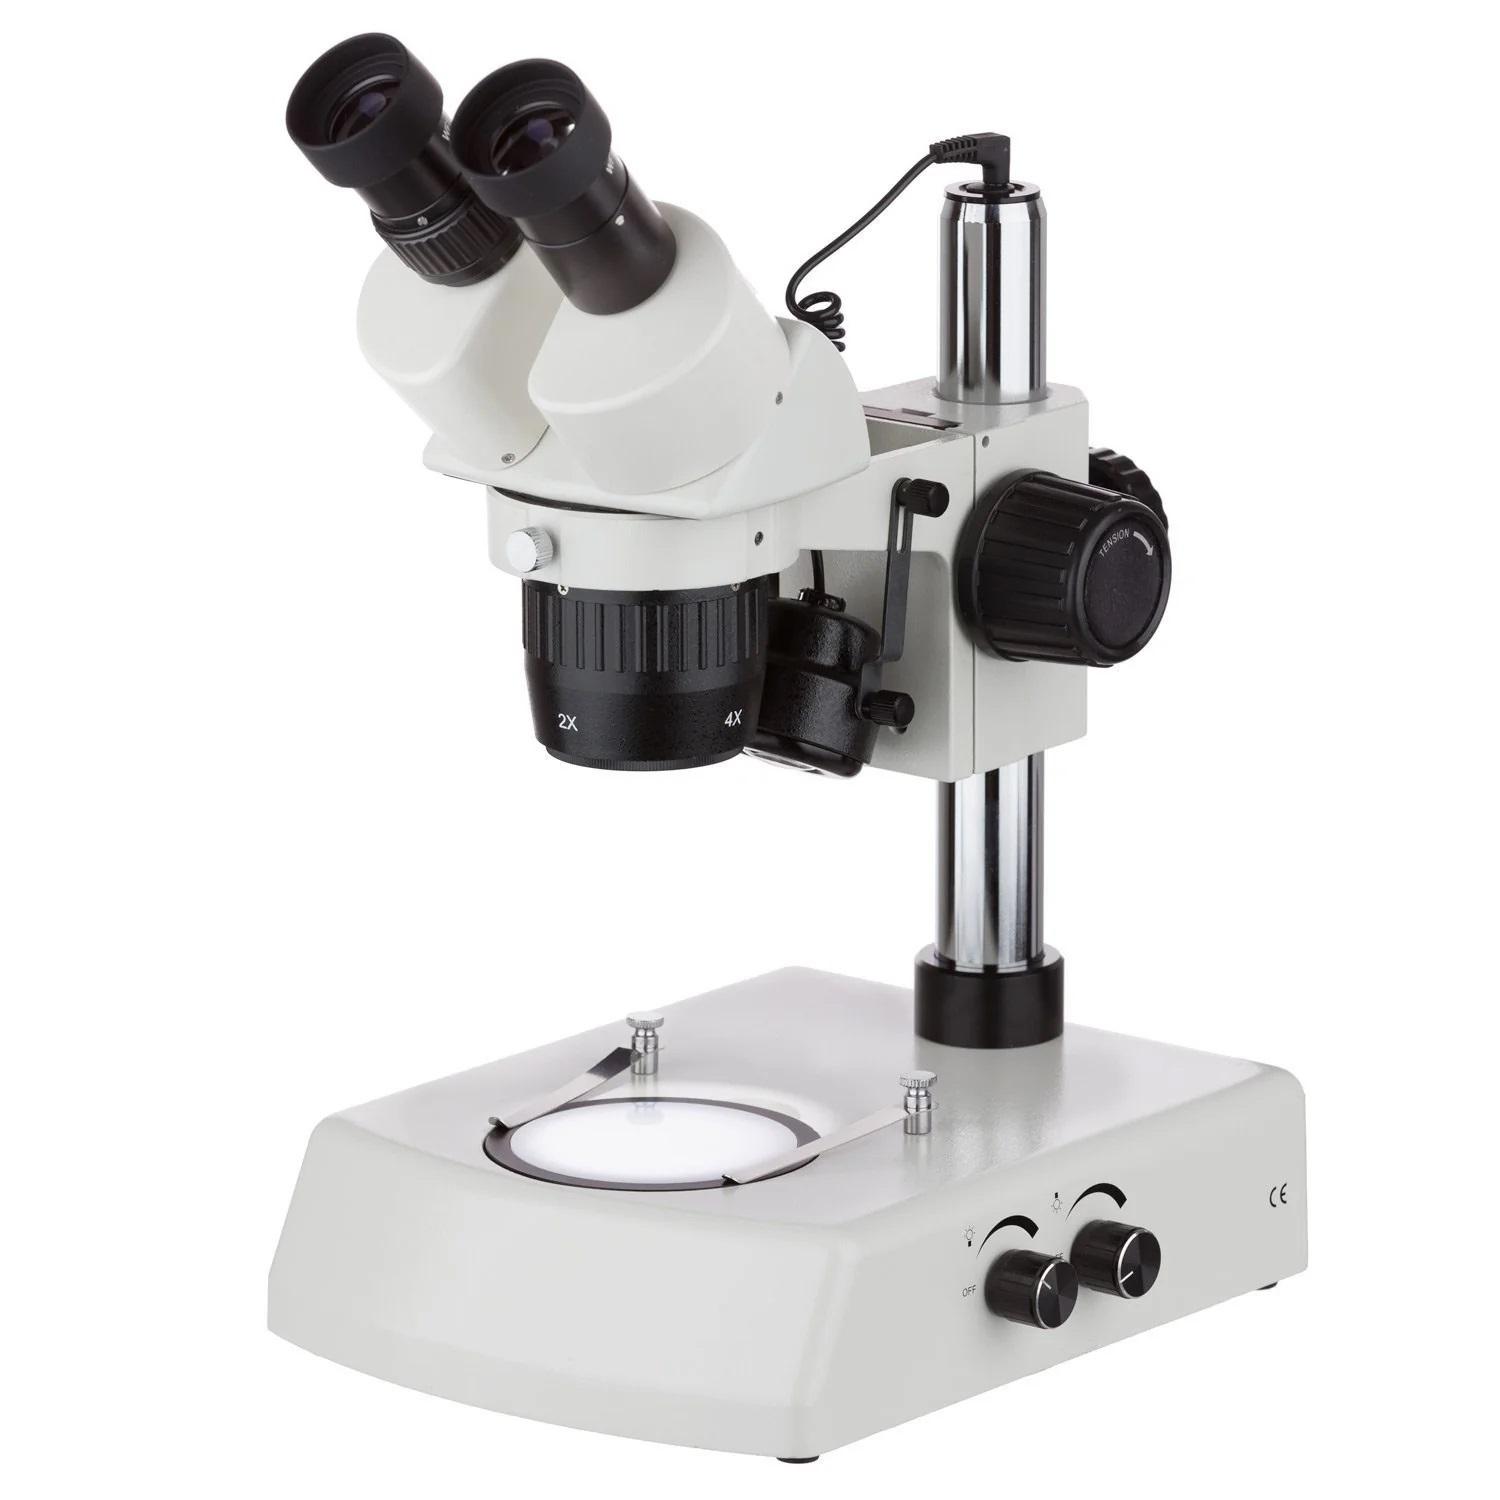 Economy Stereo Microscope - Top and Bottom LED Corded Illumination